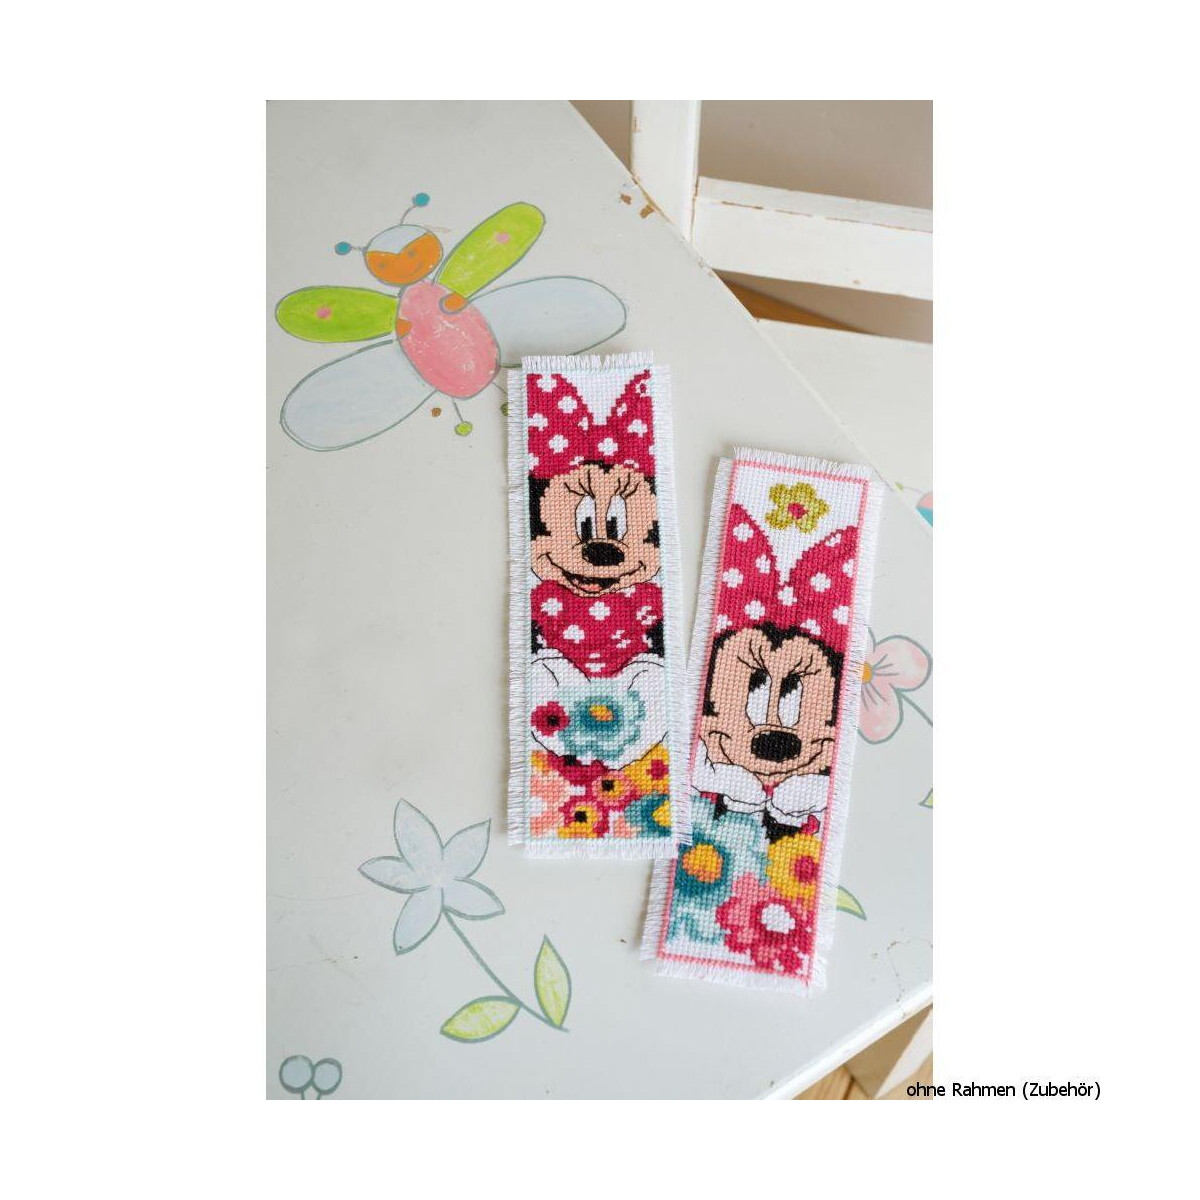 Vervaco Bookmark counted cross stitch kit Disney Minnie...